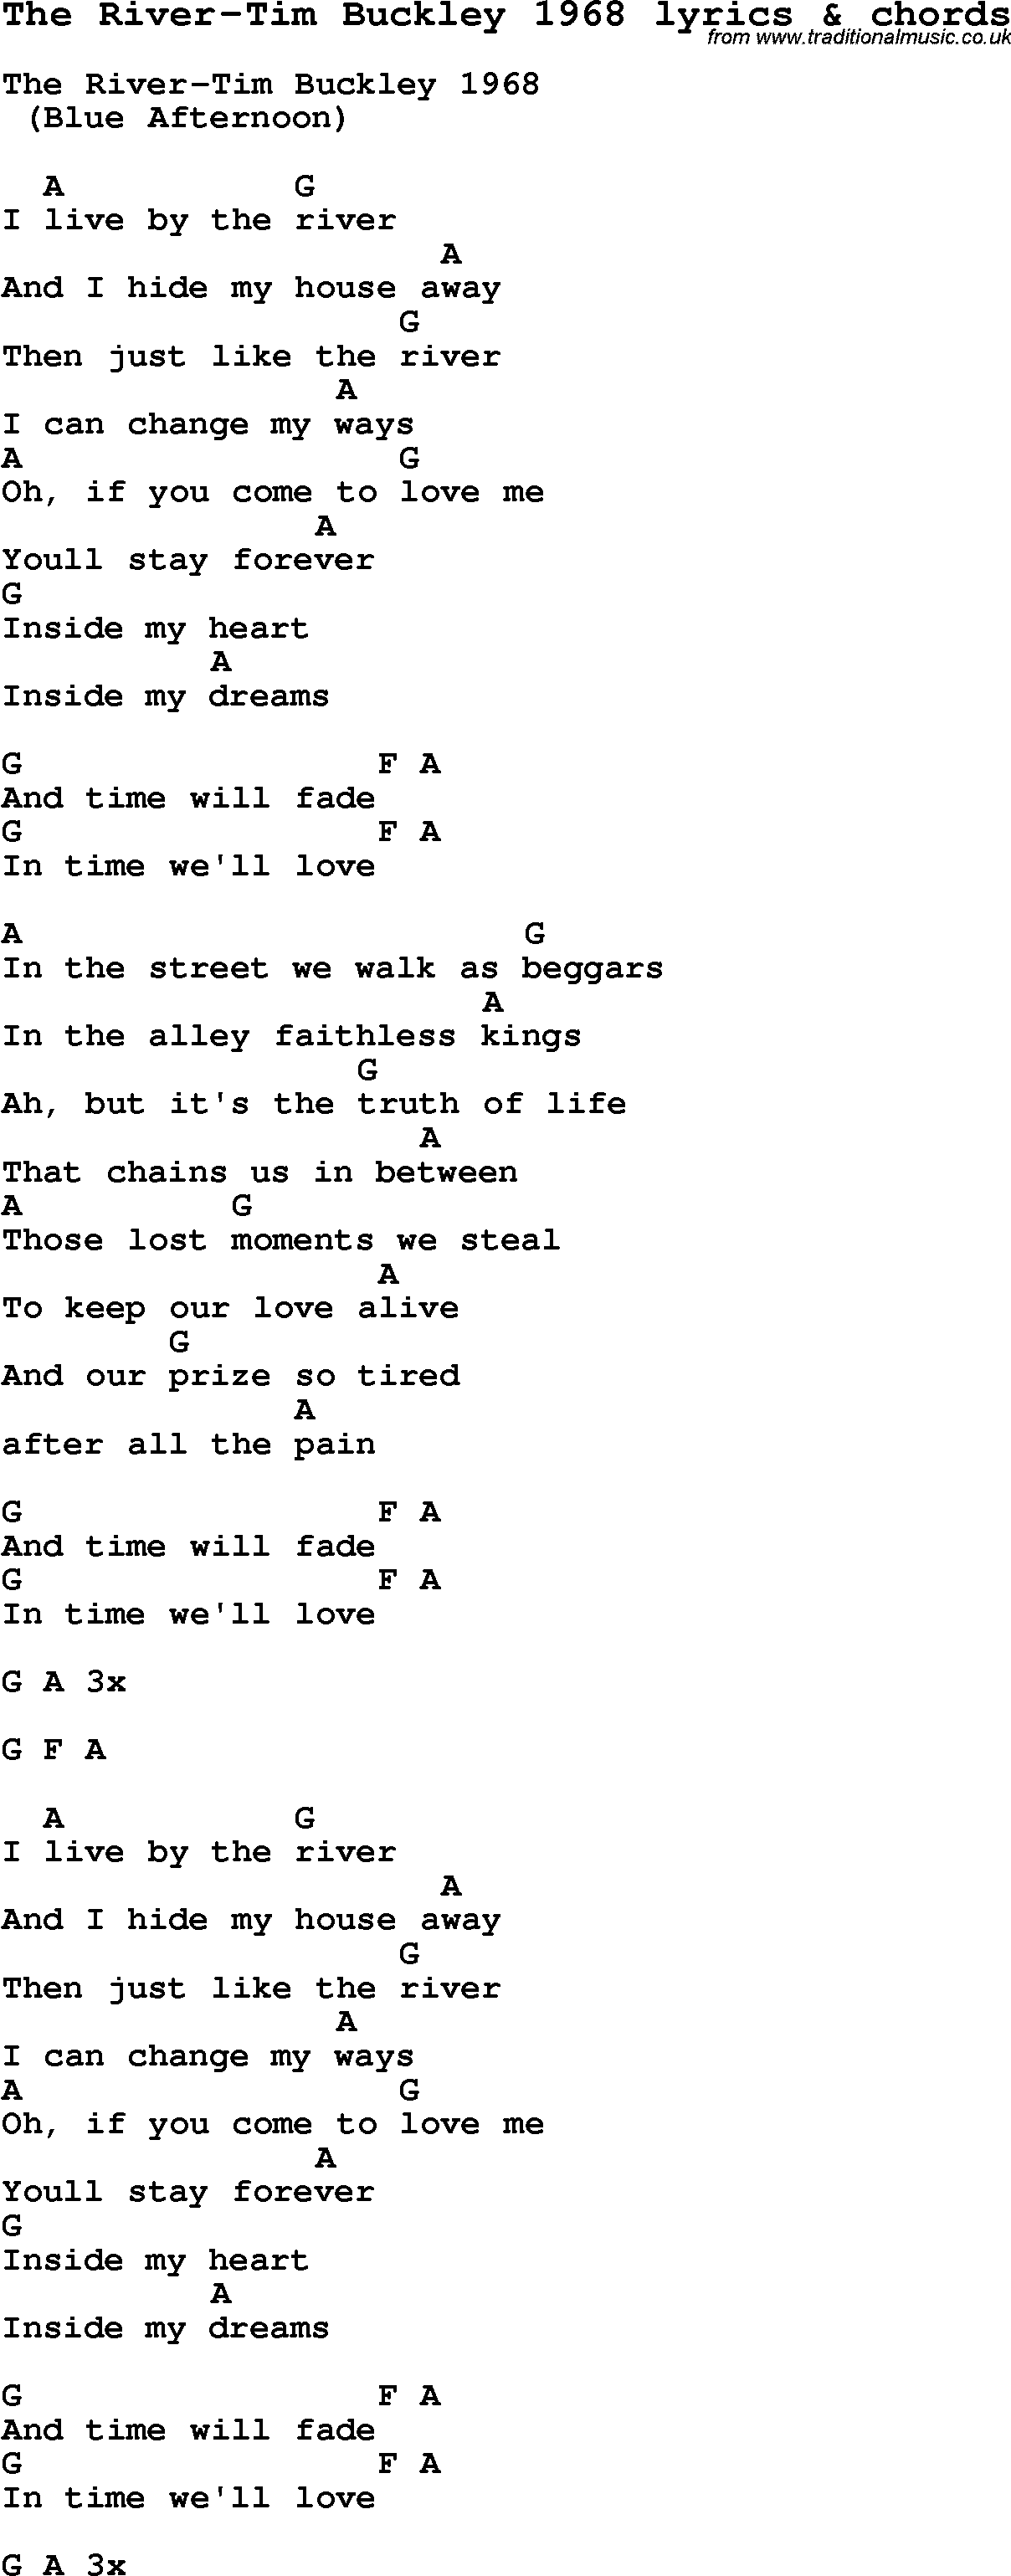 Love Song Lyrics for: The River-Tim Buckley 1968 with chords for Ukulele, Guitar Banjo etc.